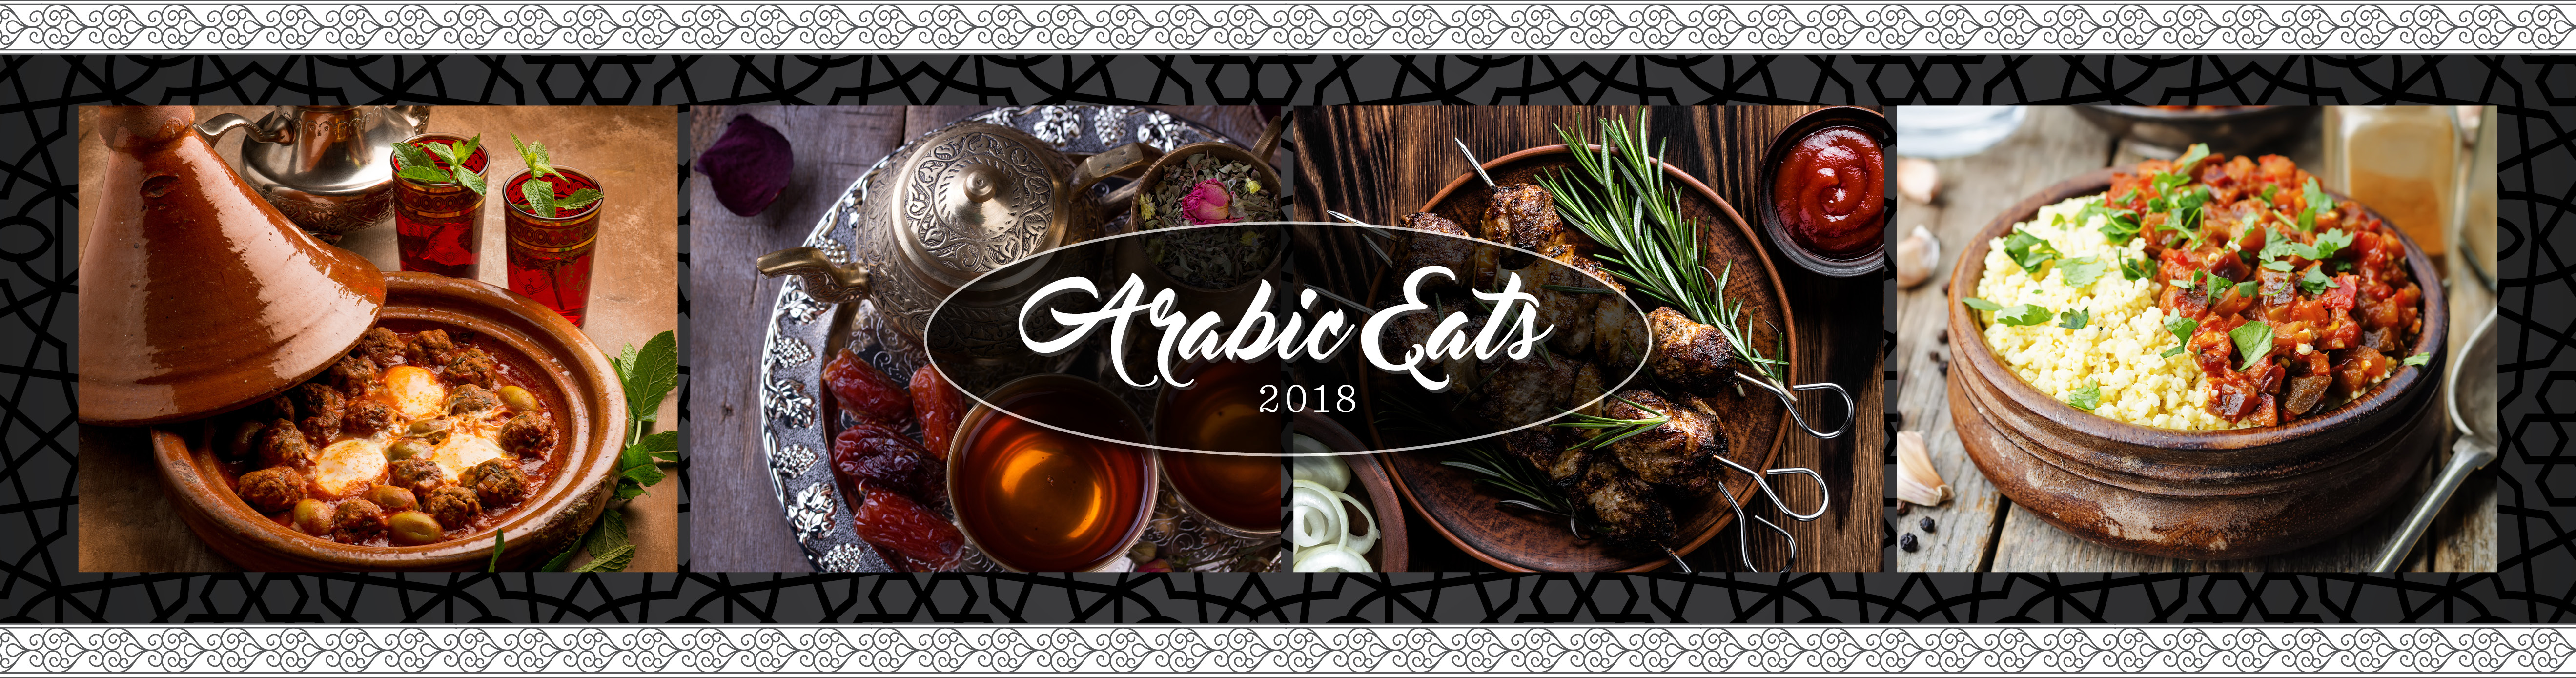 Arabic Eats header